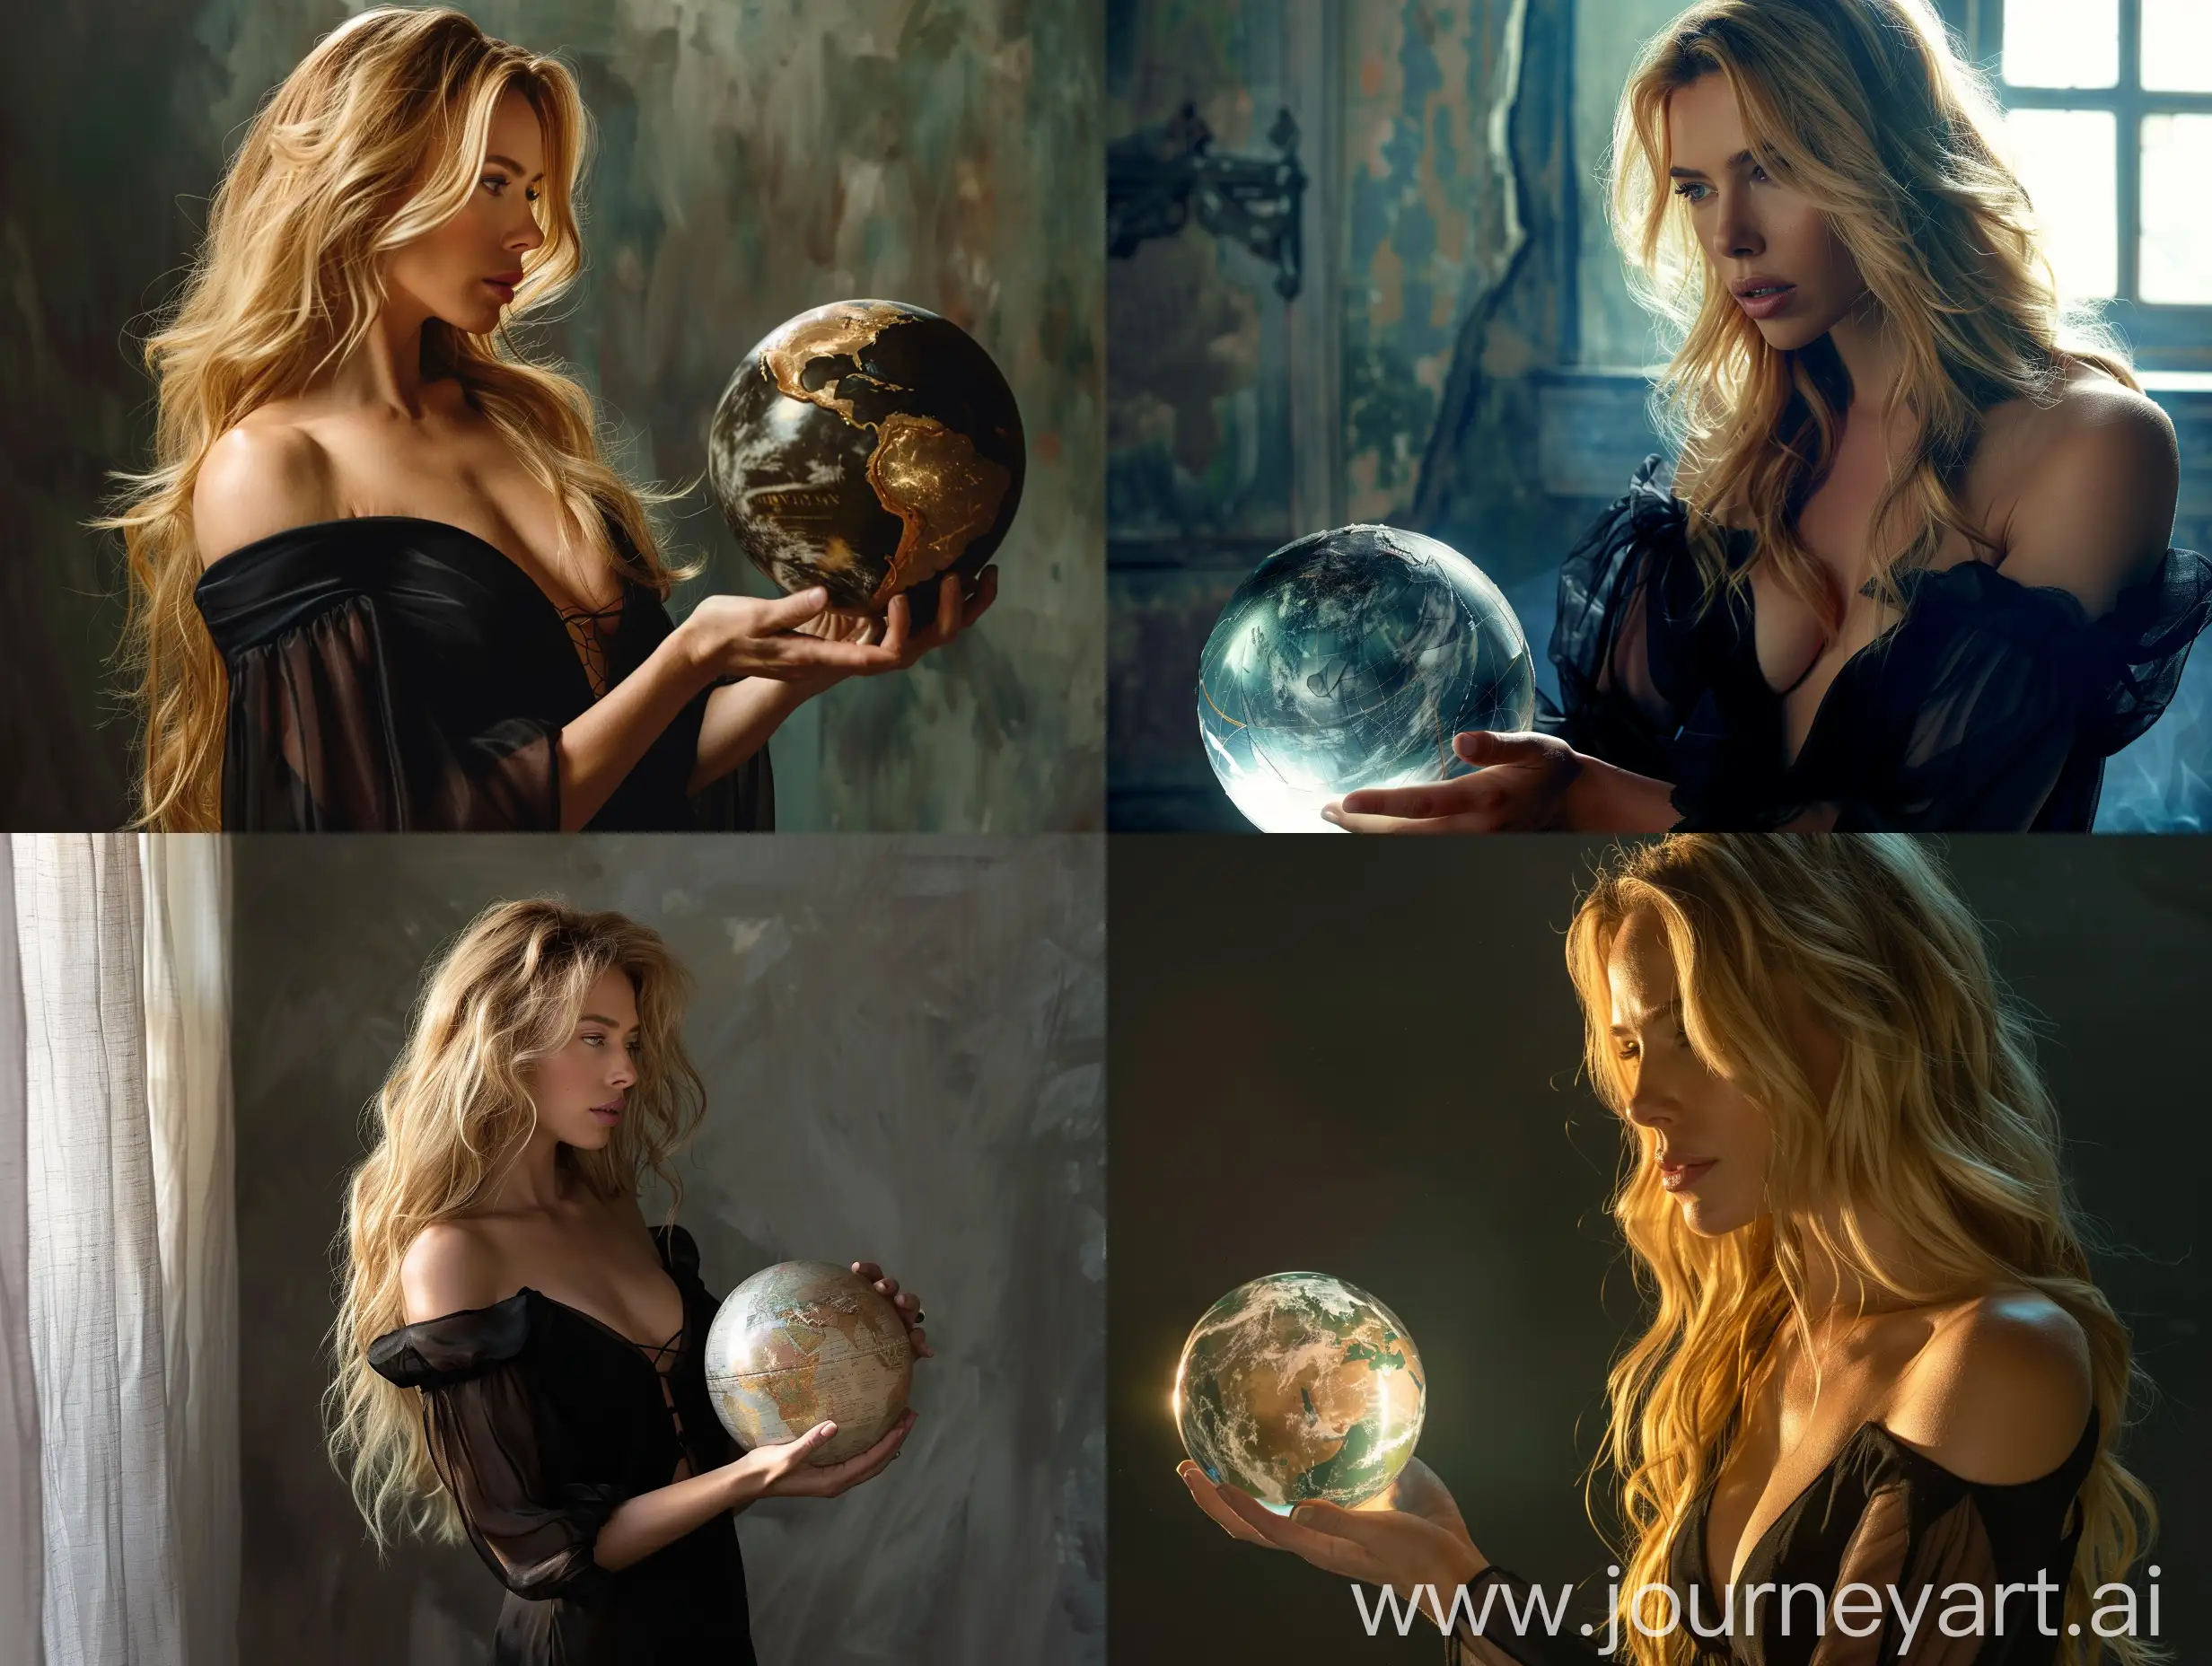 Futuristic-Vision-Scarlett-Johansson-Examining-a-Real-Globe-in-Elegant-Attire